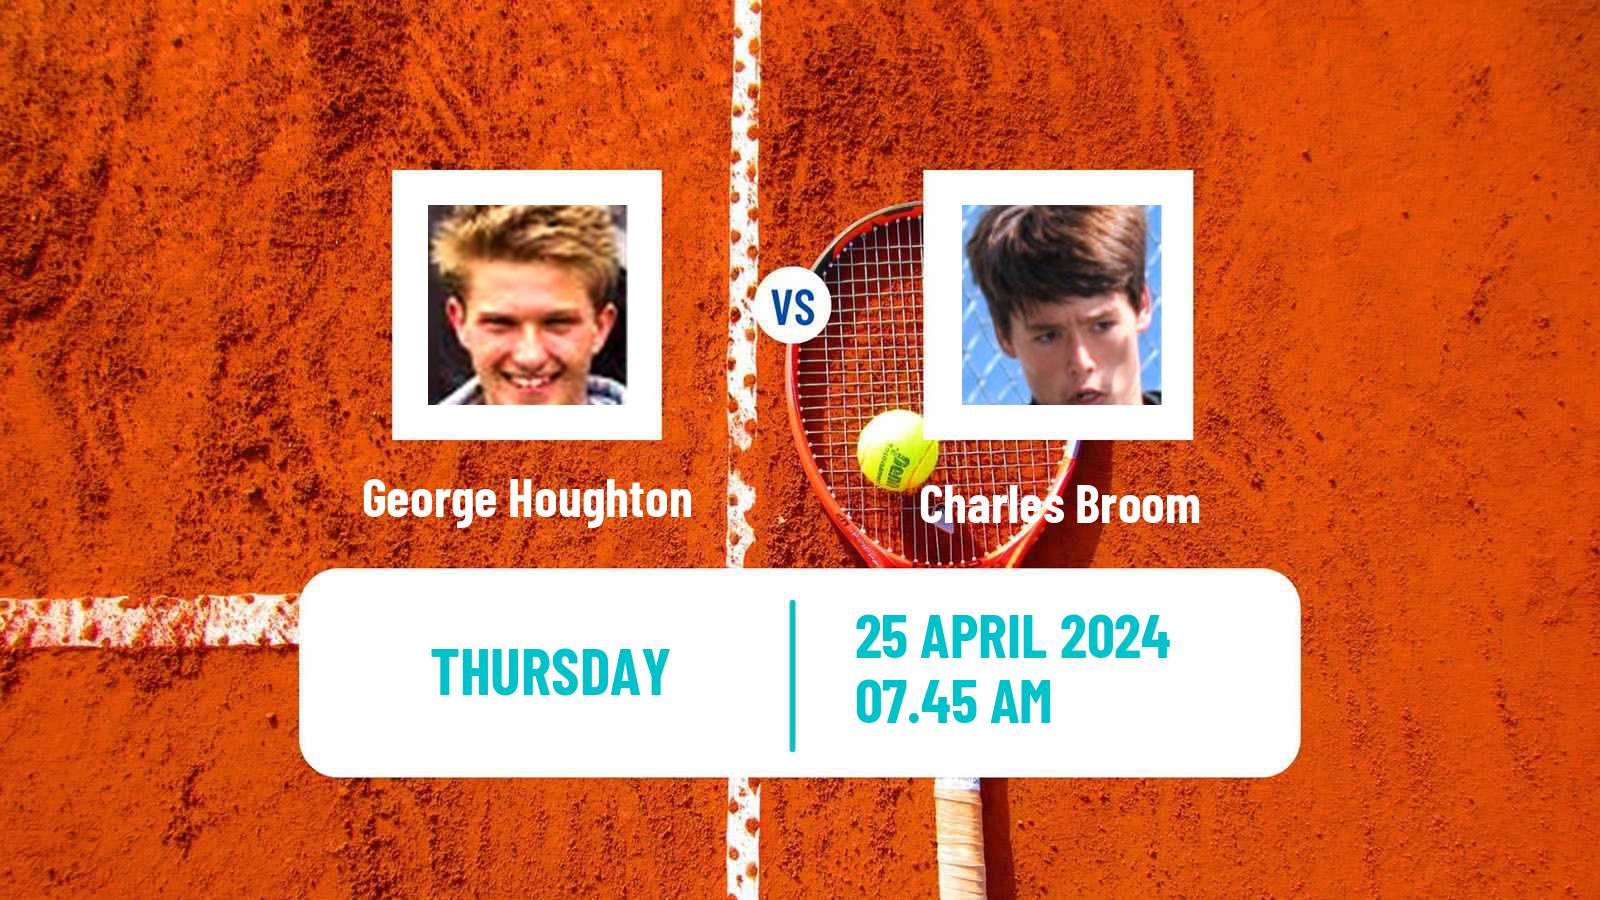 Tennis ITF M25 Nottingham Men George Houghton - Charles Broom